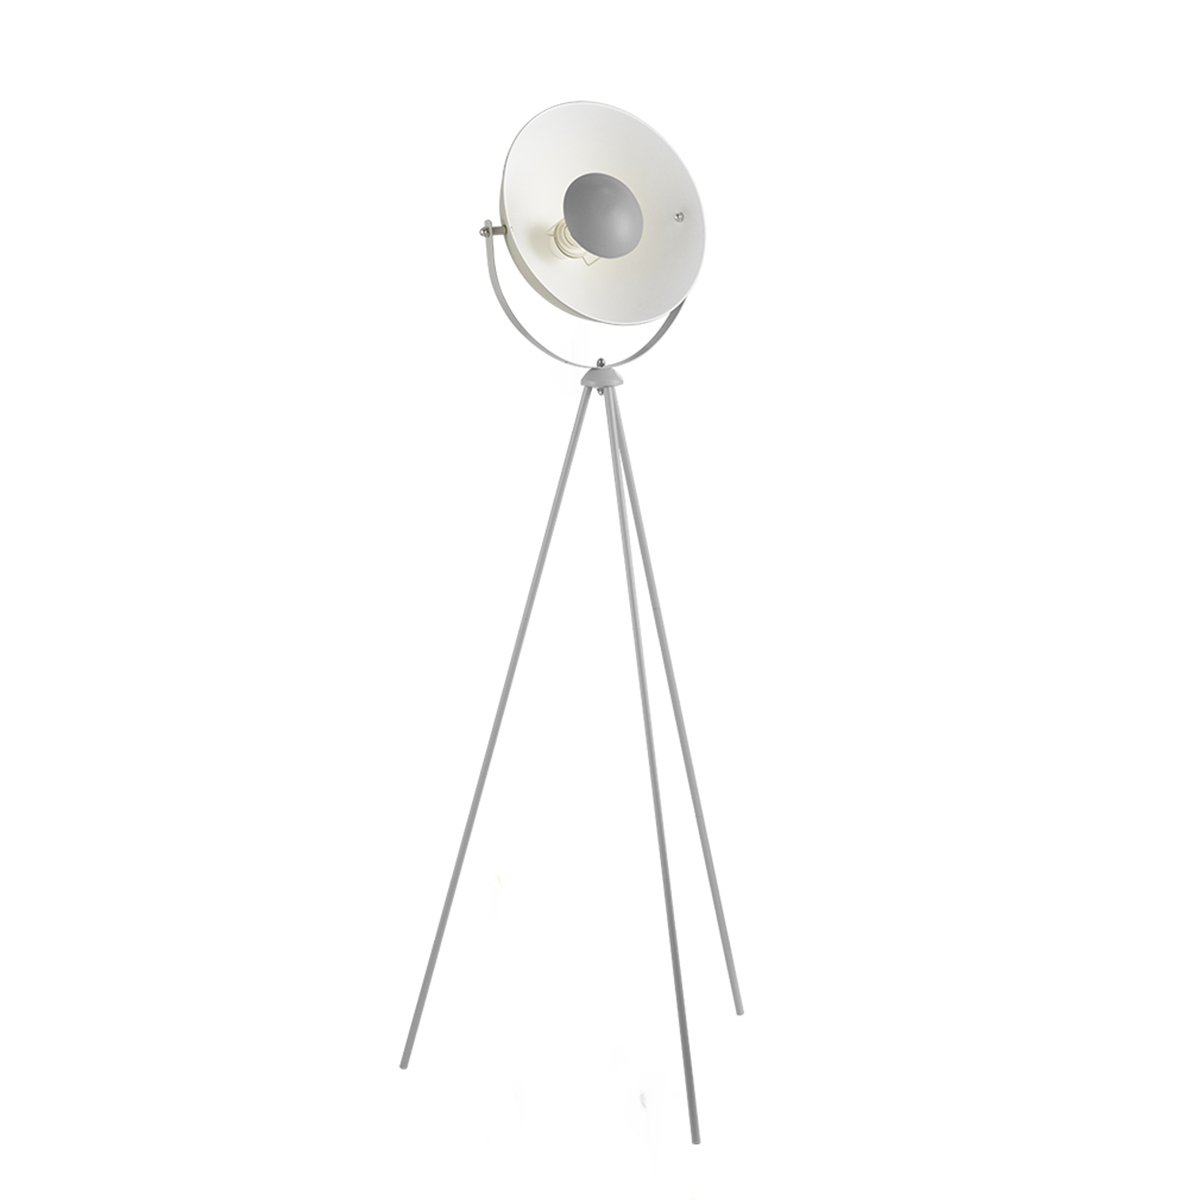 Tangla lighting - TLF7006-01GY - LED floor lamp 1 Light - metal in grey - tripod - E27